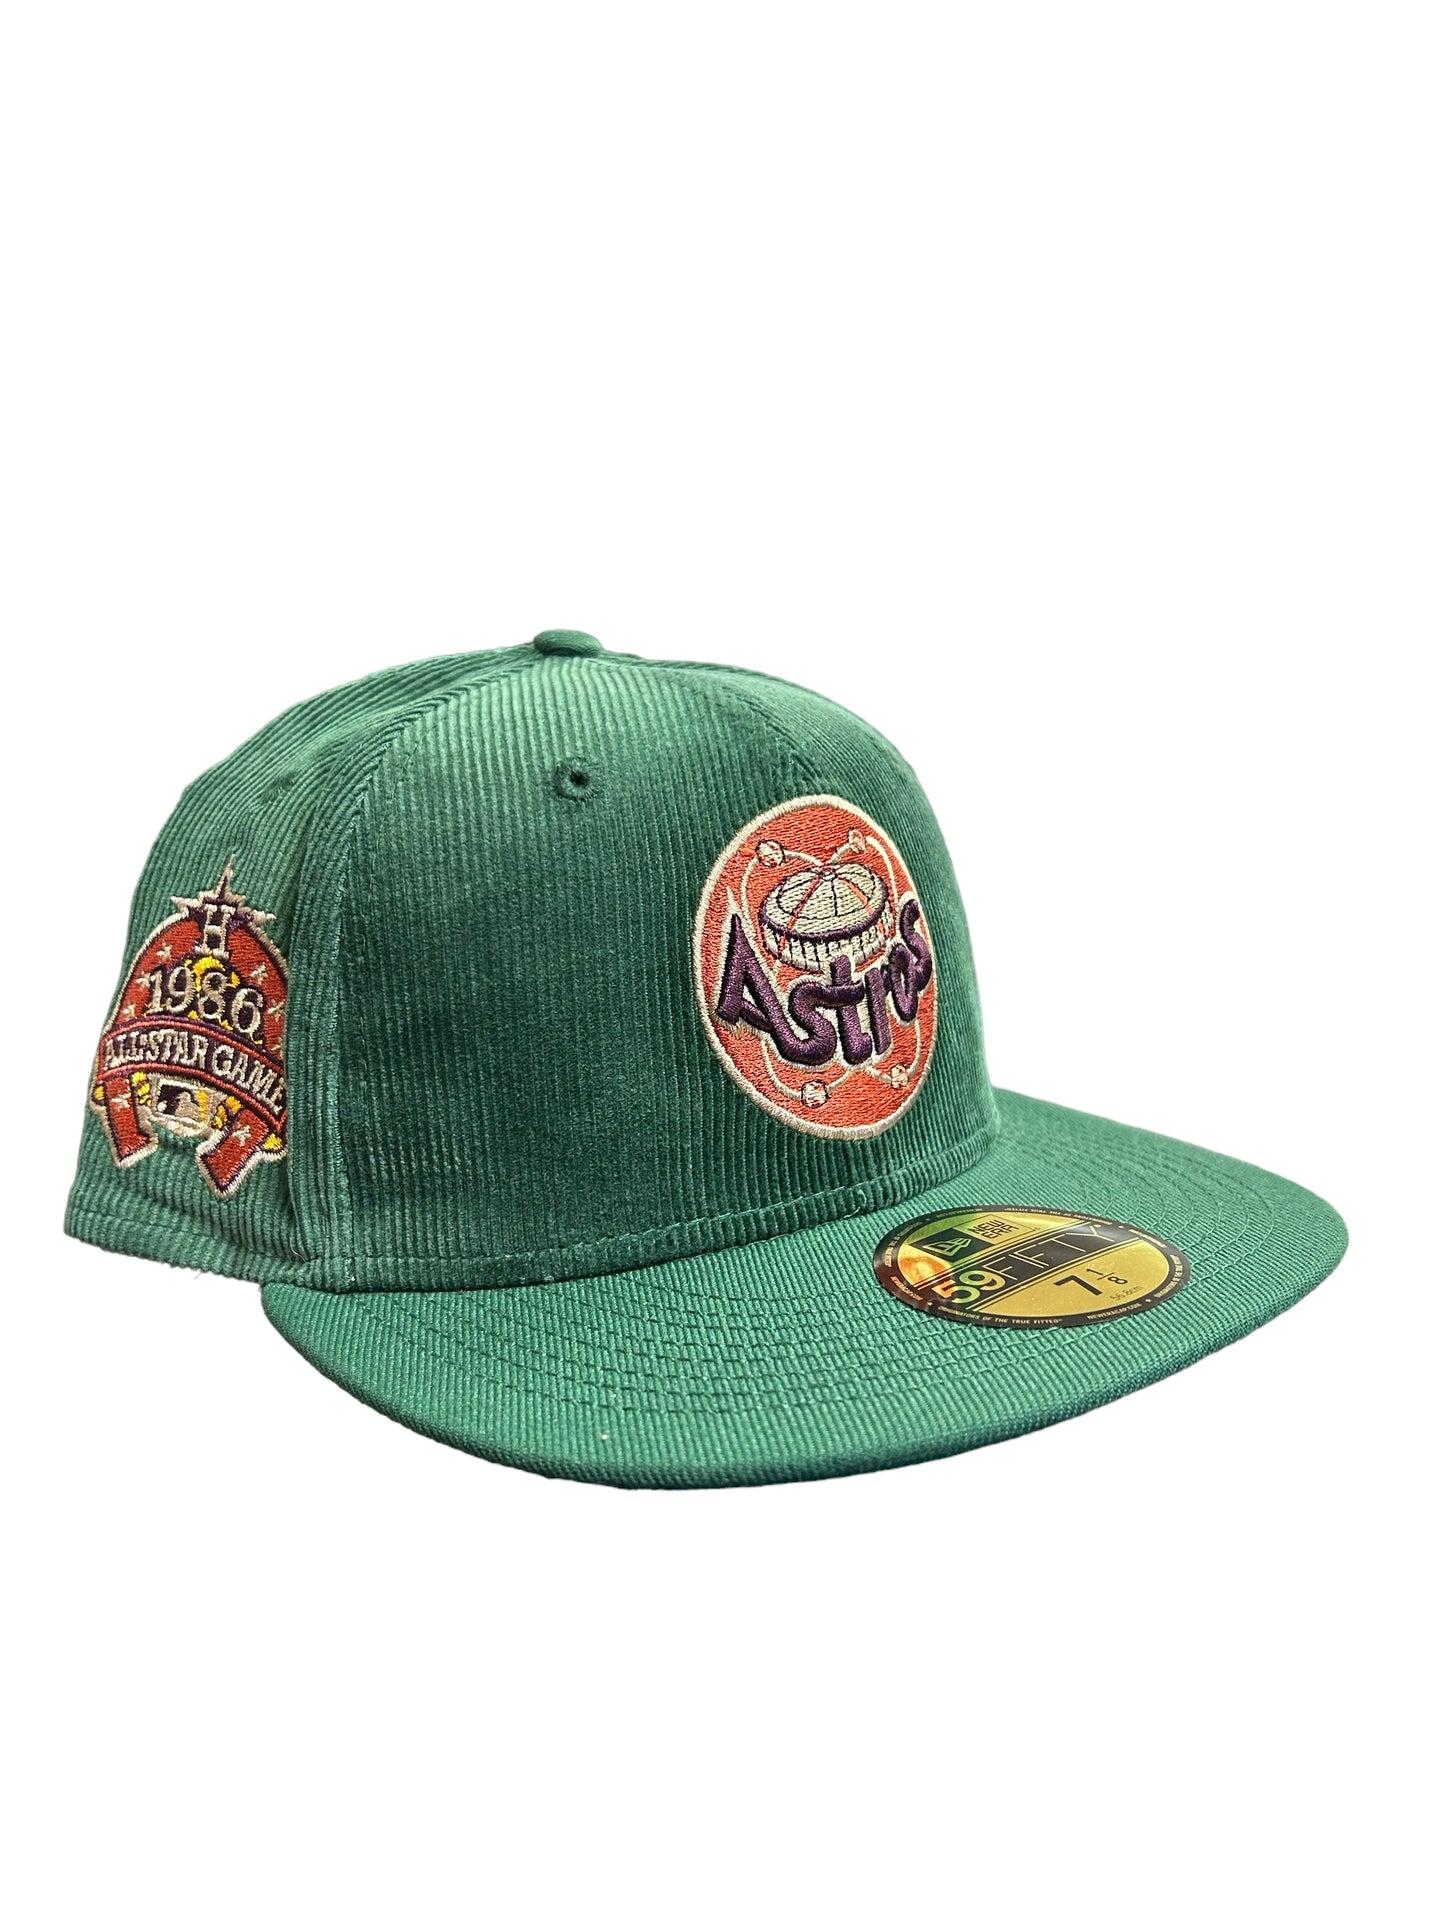 Houston Astros Green Corduroyed Hat